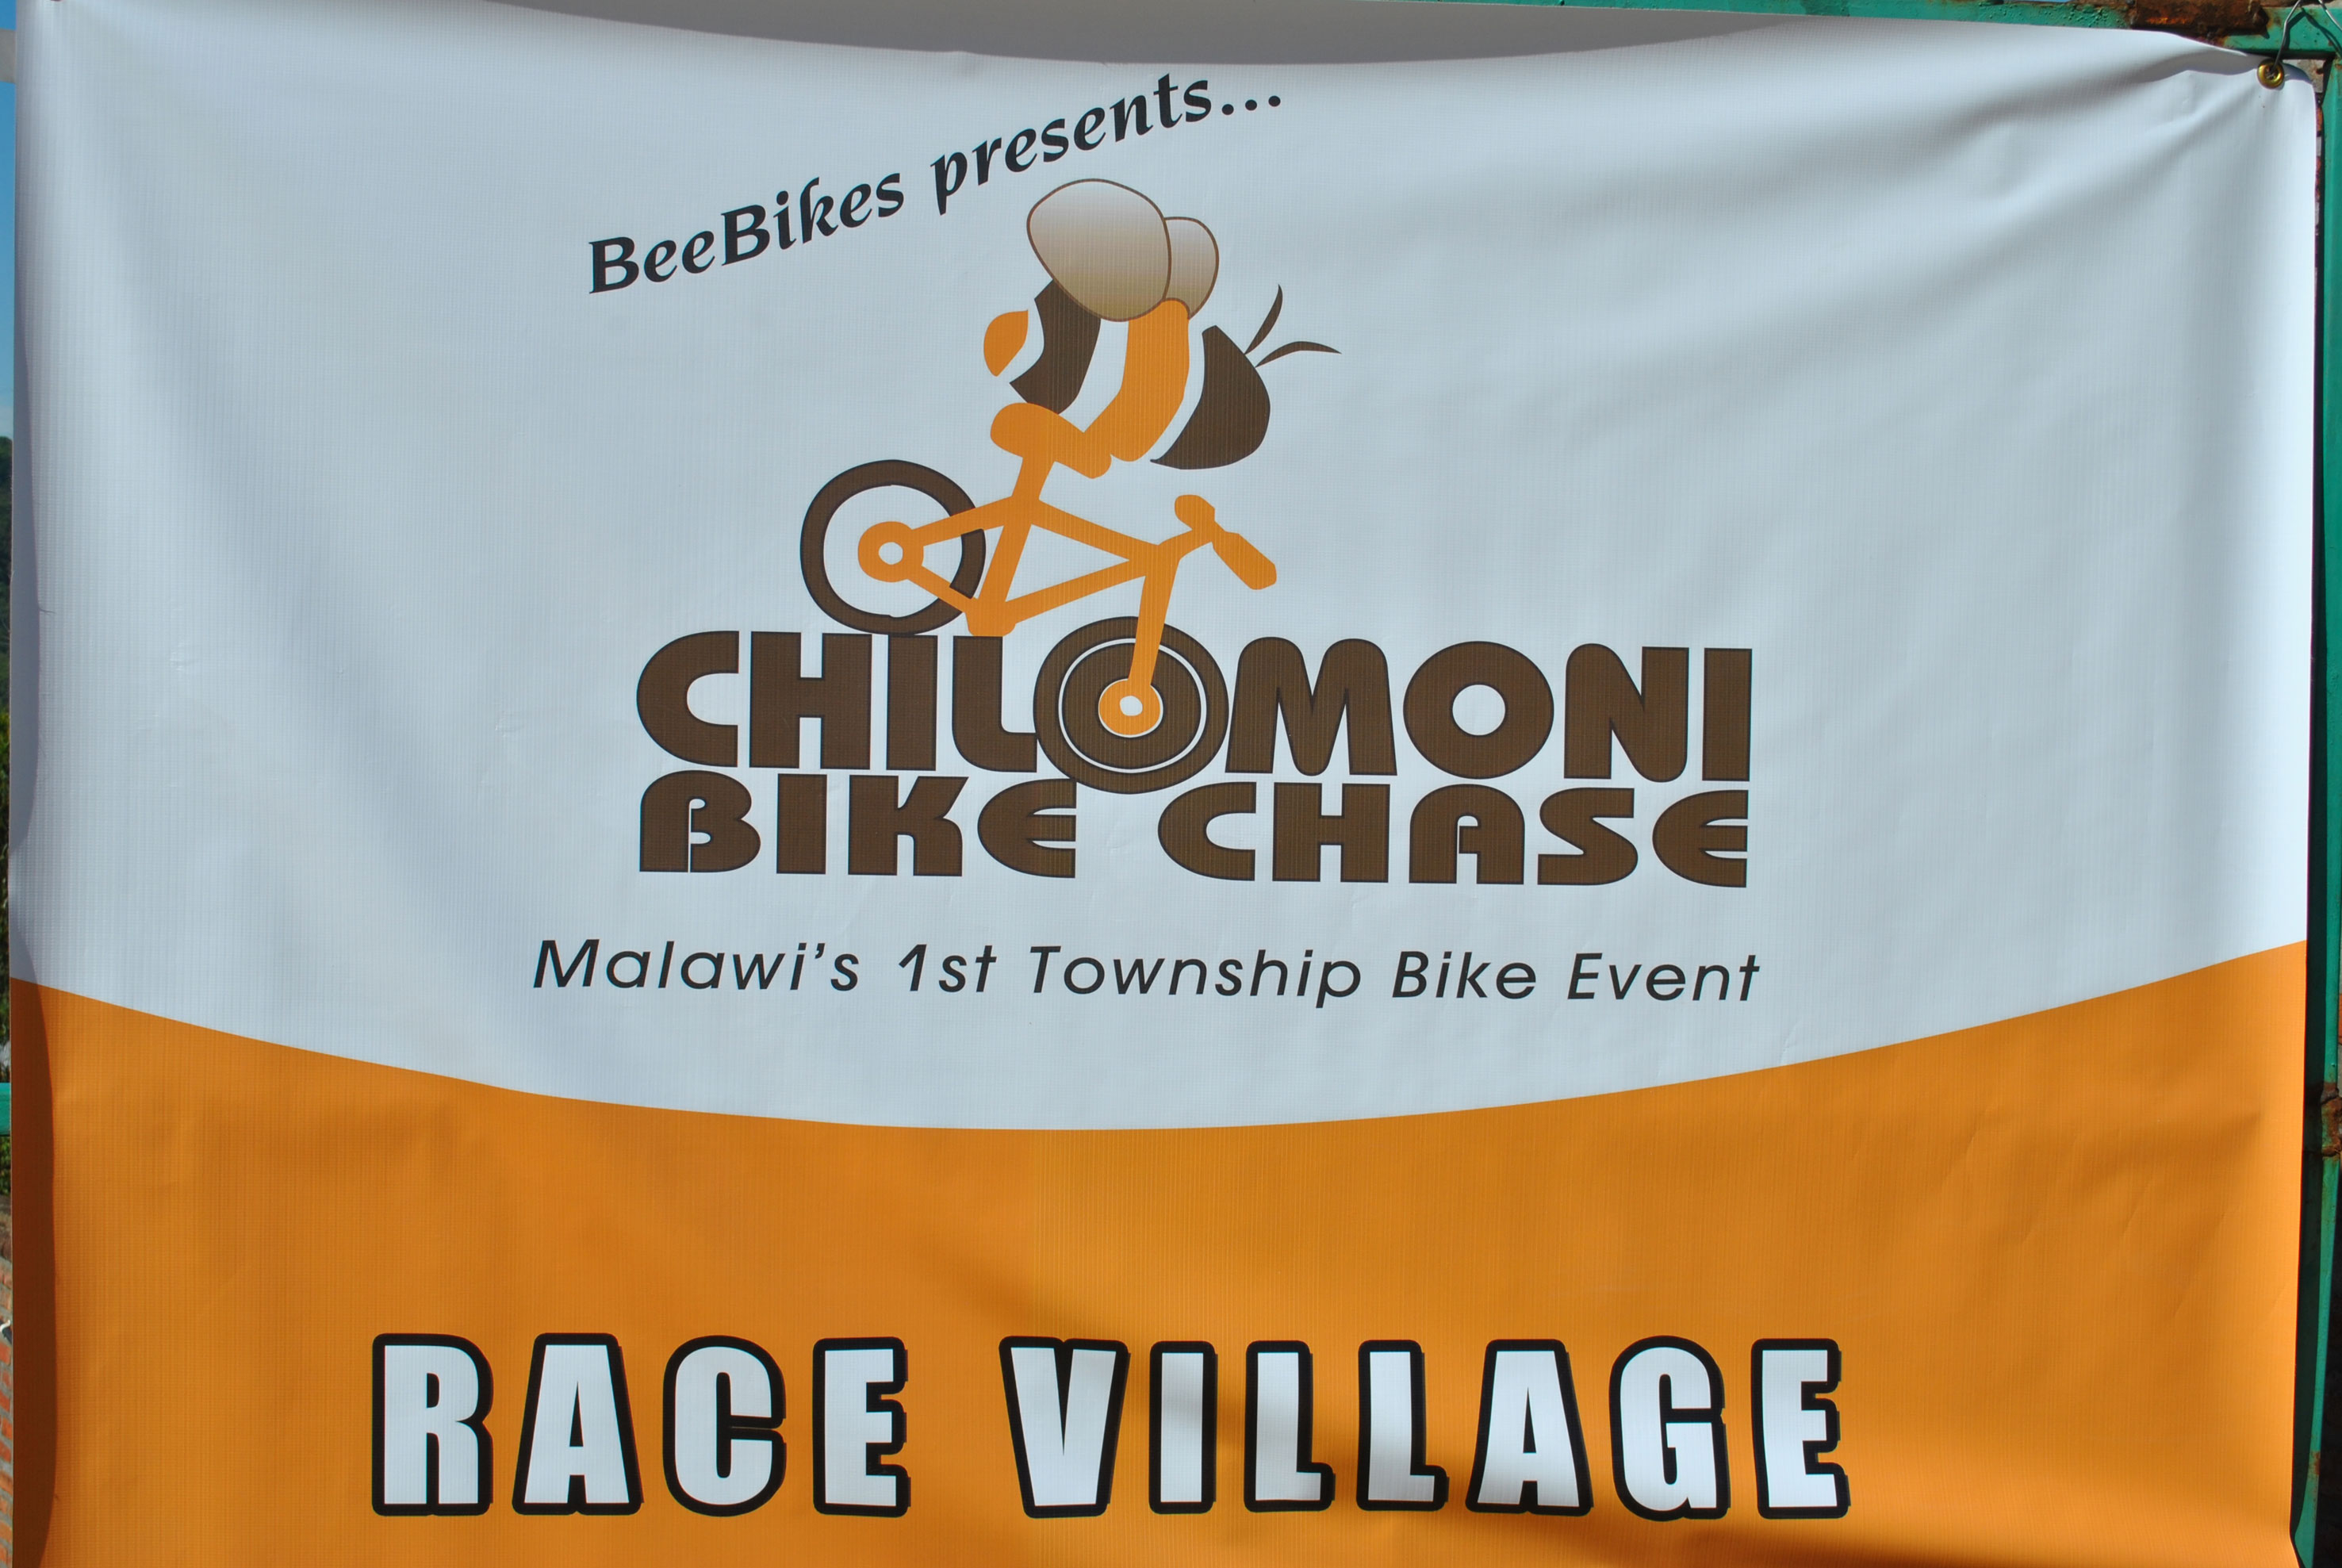 The first Chilomoni bike chase